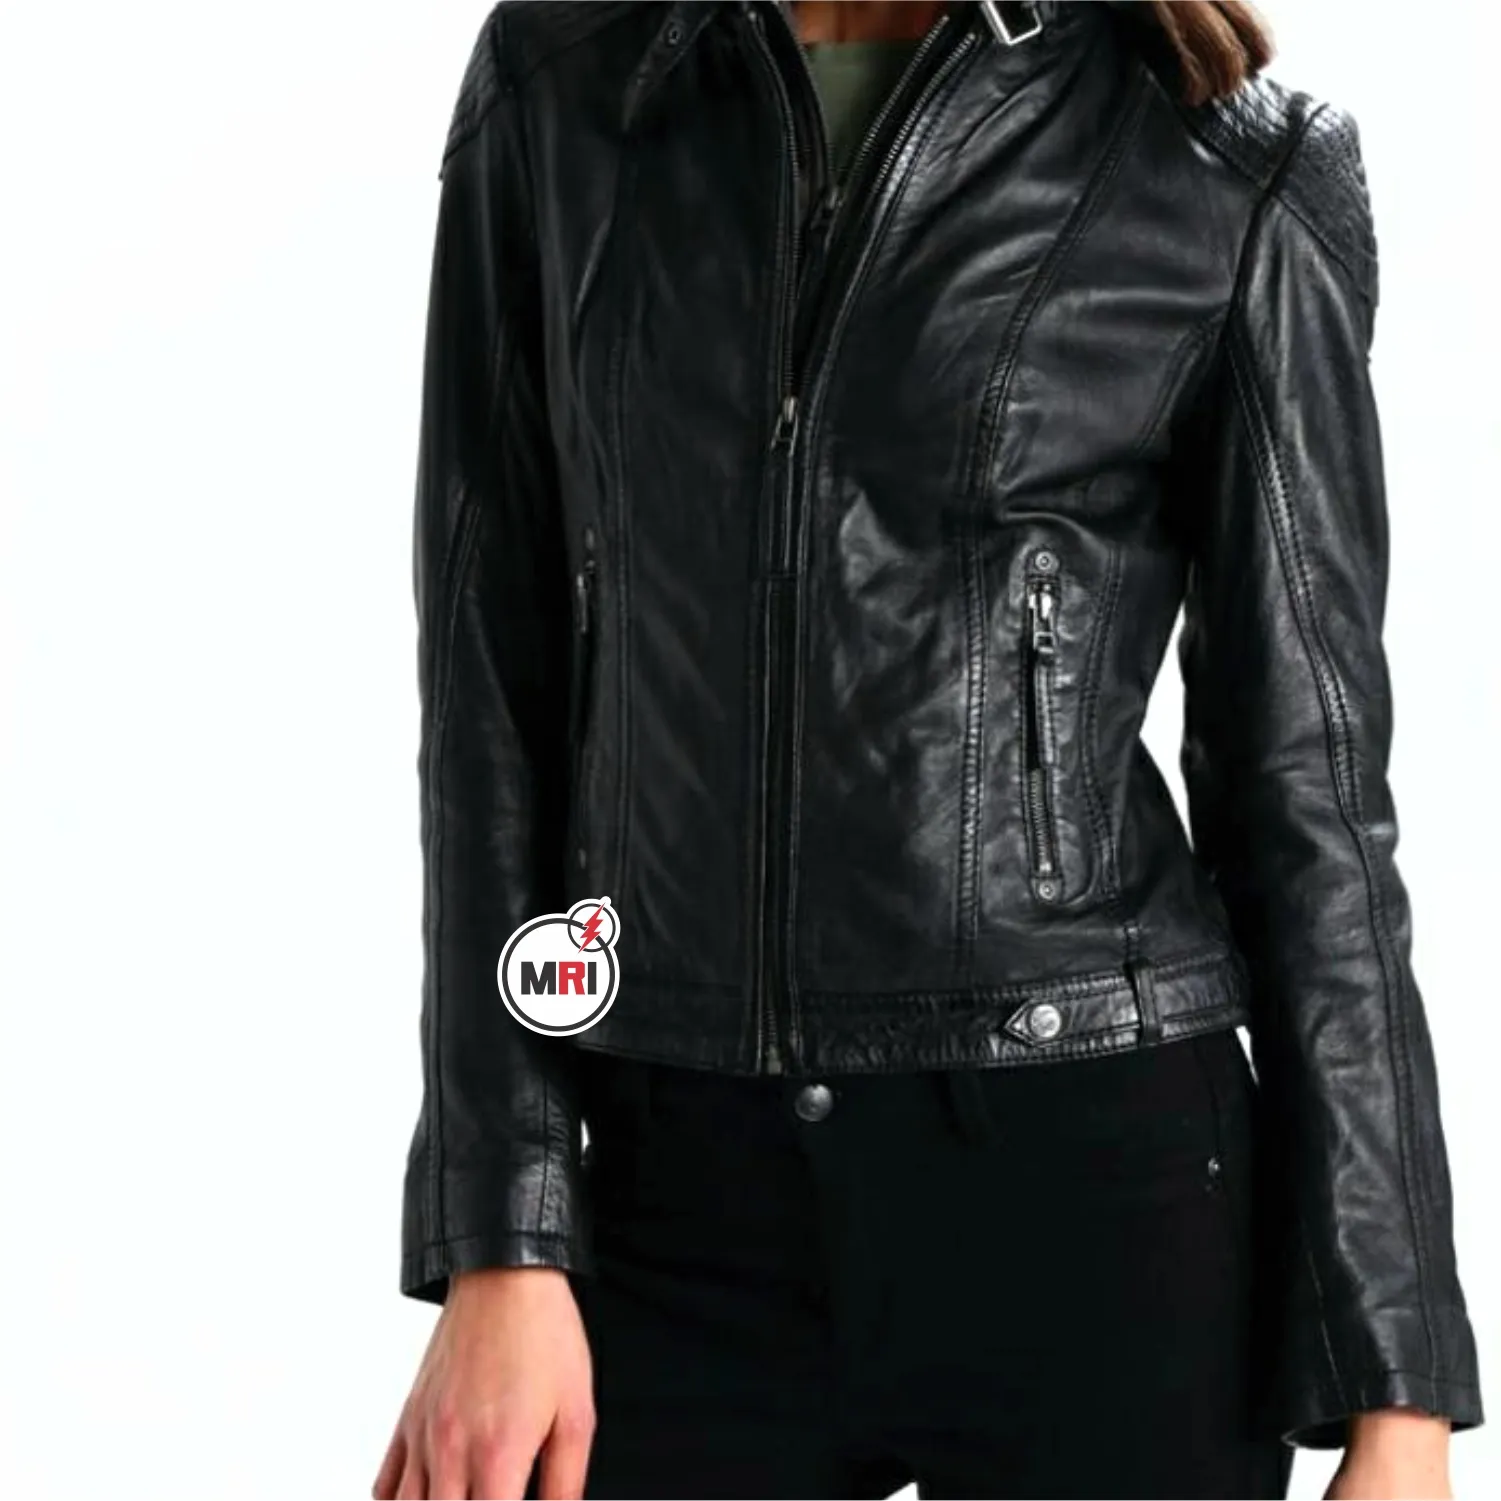 Outono e inverno novas mulheres jaqueta de couro slim jaqueta de couro moda mulheres atacado Brand New Wholesale PU Leather Jackets f